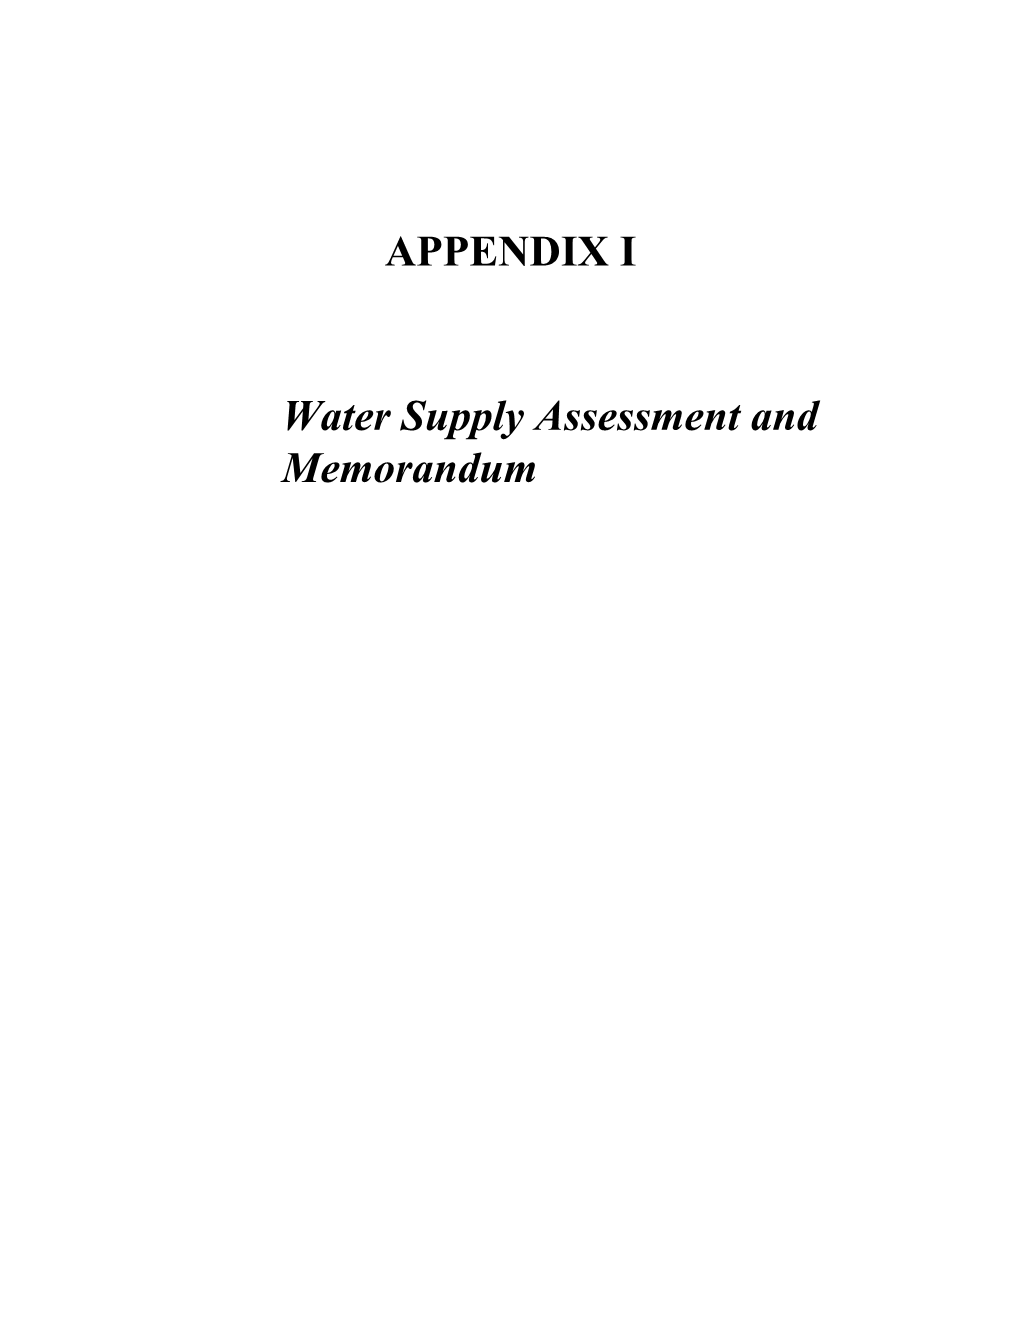 APPENDIX I Water Supply Assessment and Memorandum